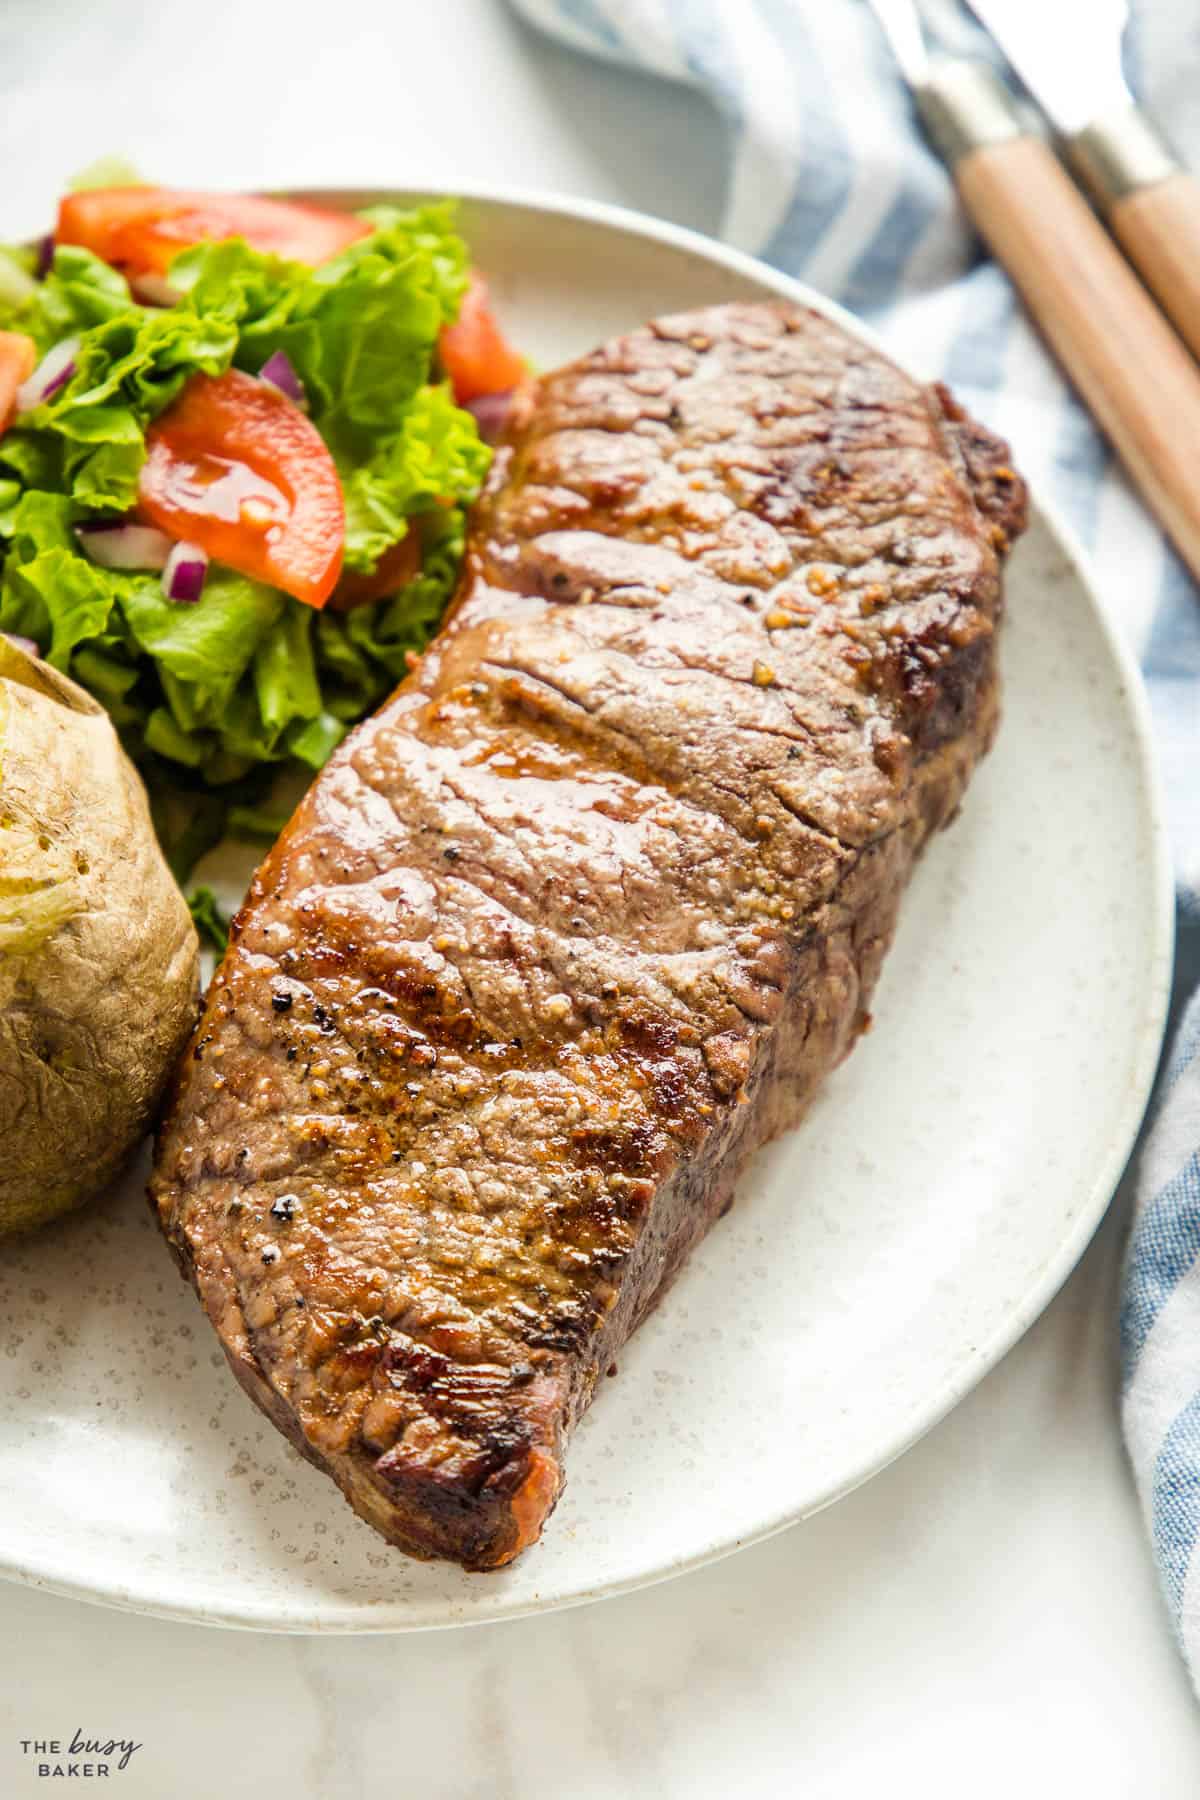 grilled sirloin steak on plate